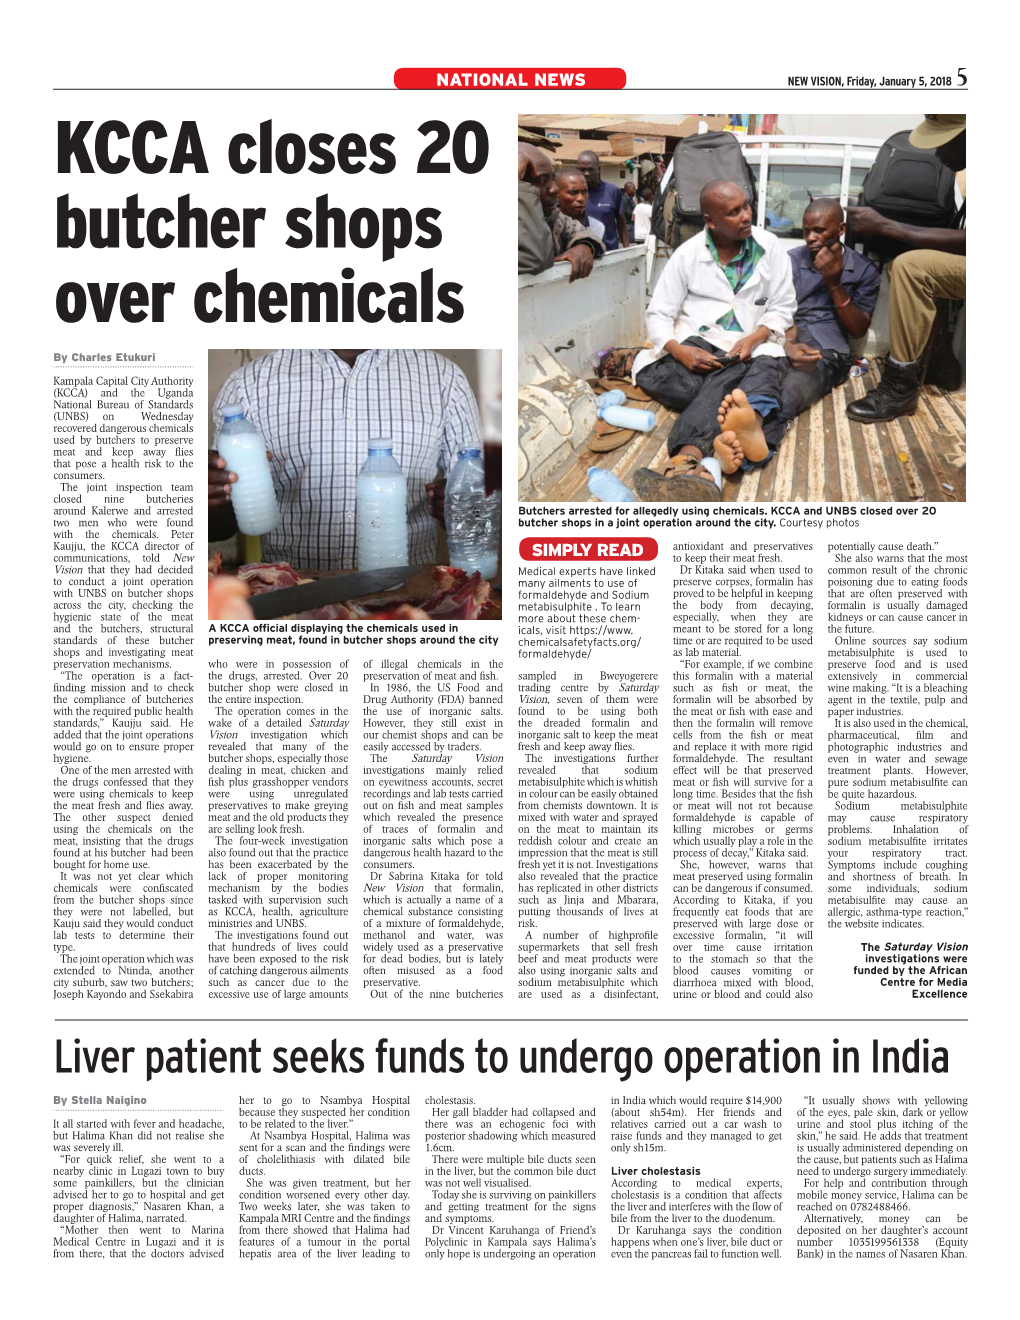 KCCA Closes 20 Butcher Shops Over Chemicals